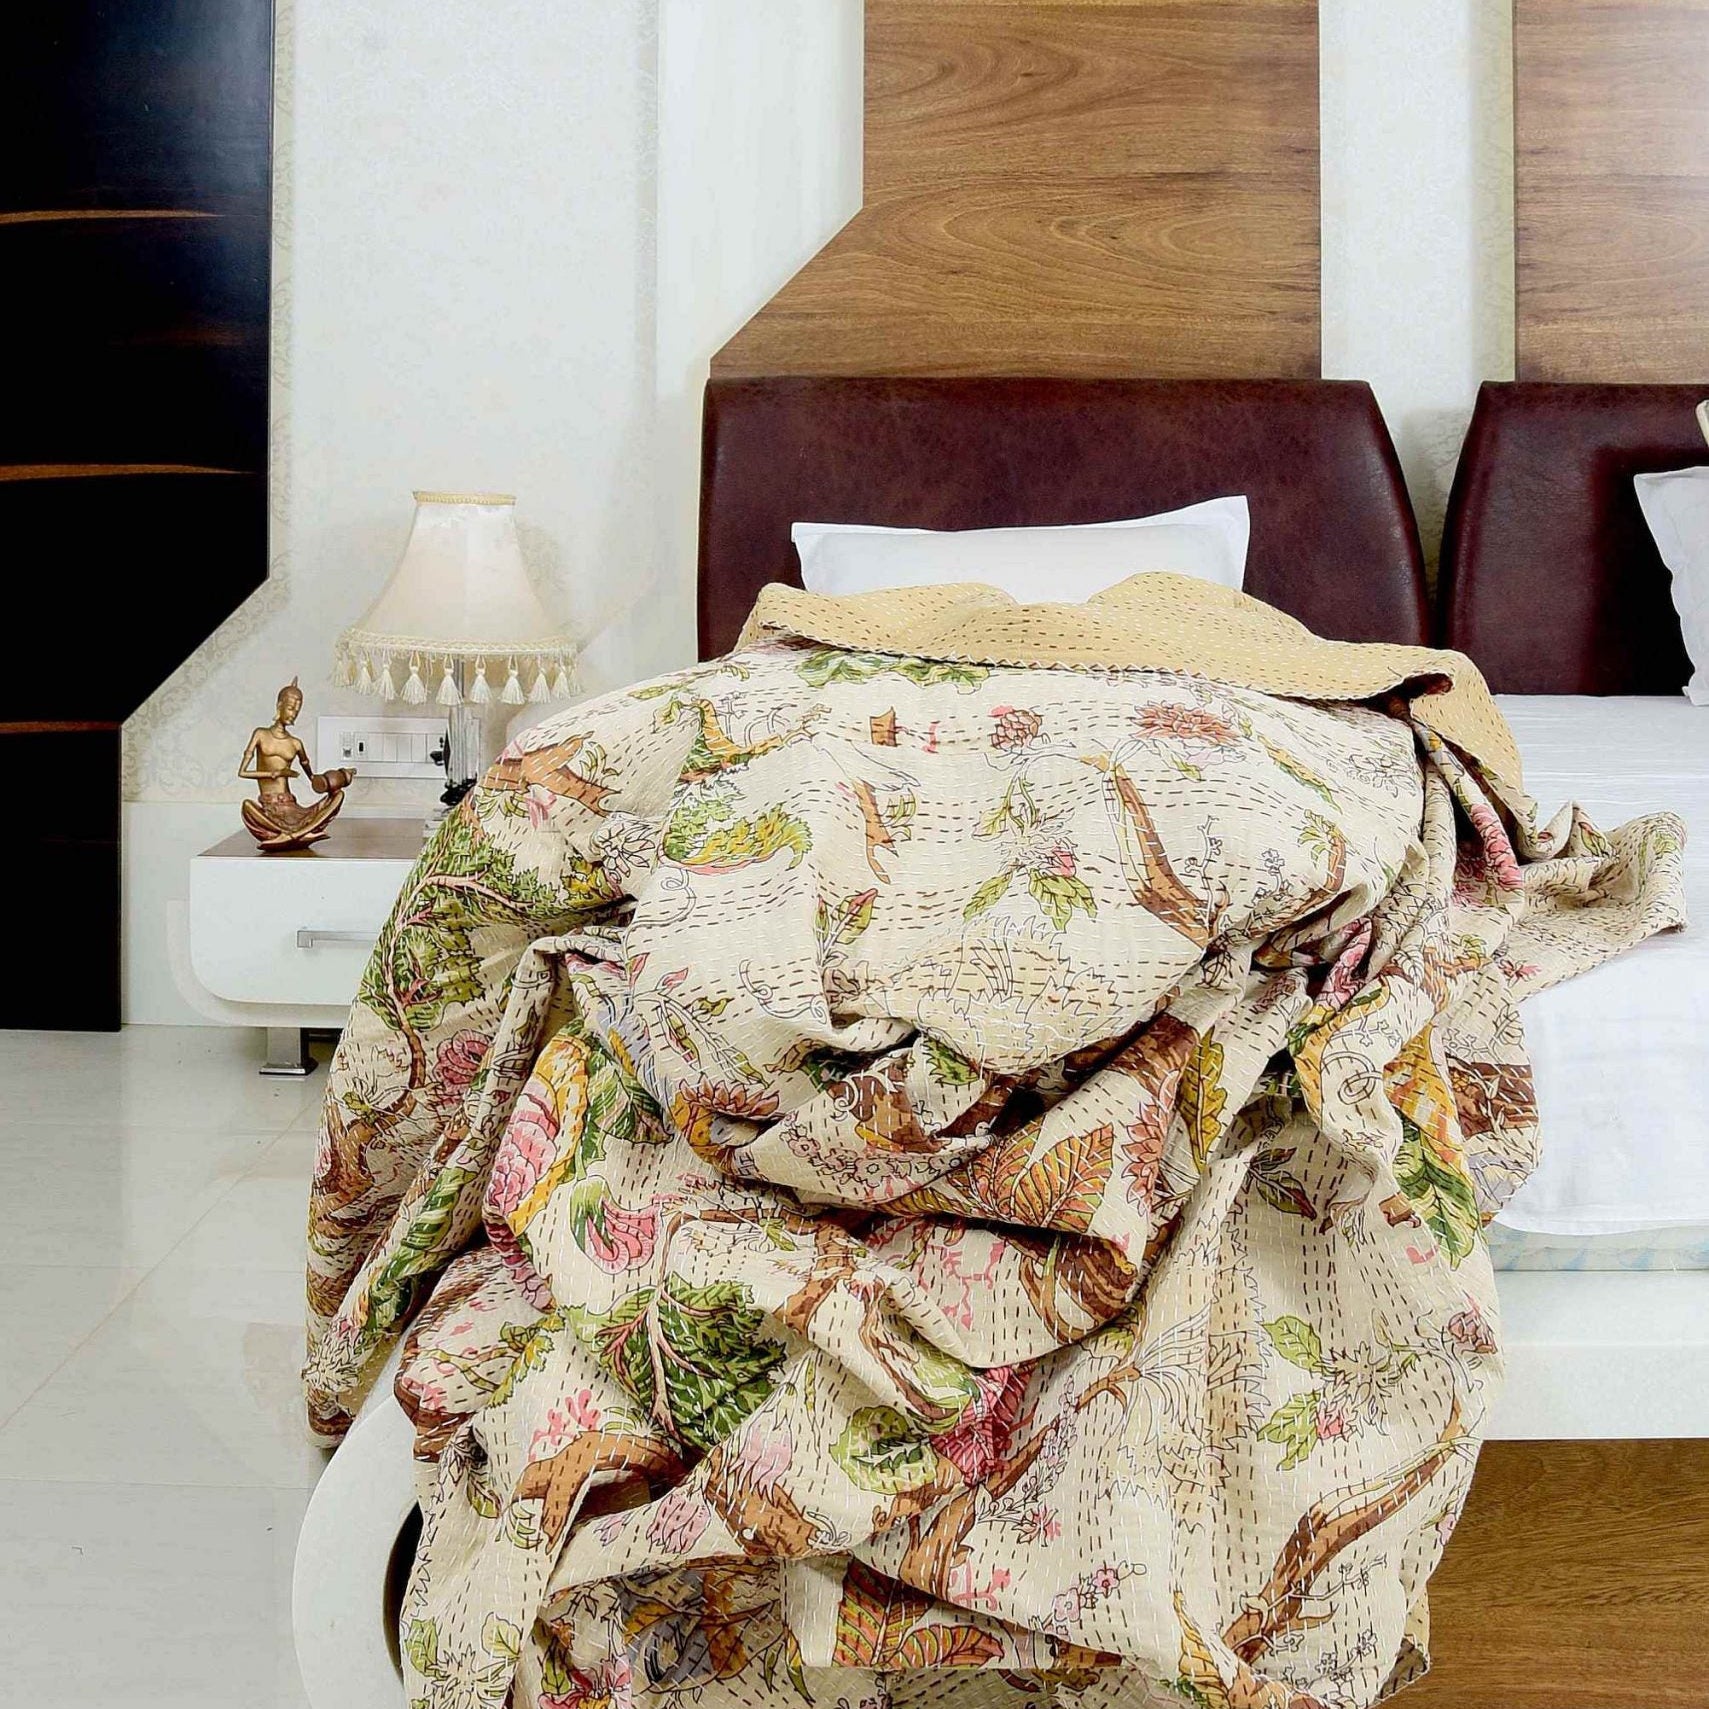 Vintage Hand Made Indian Kantha Bed Spread Blanket Throw Quilt King Size Home DecorBedroom Boho Decor